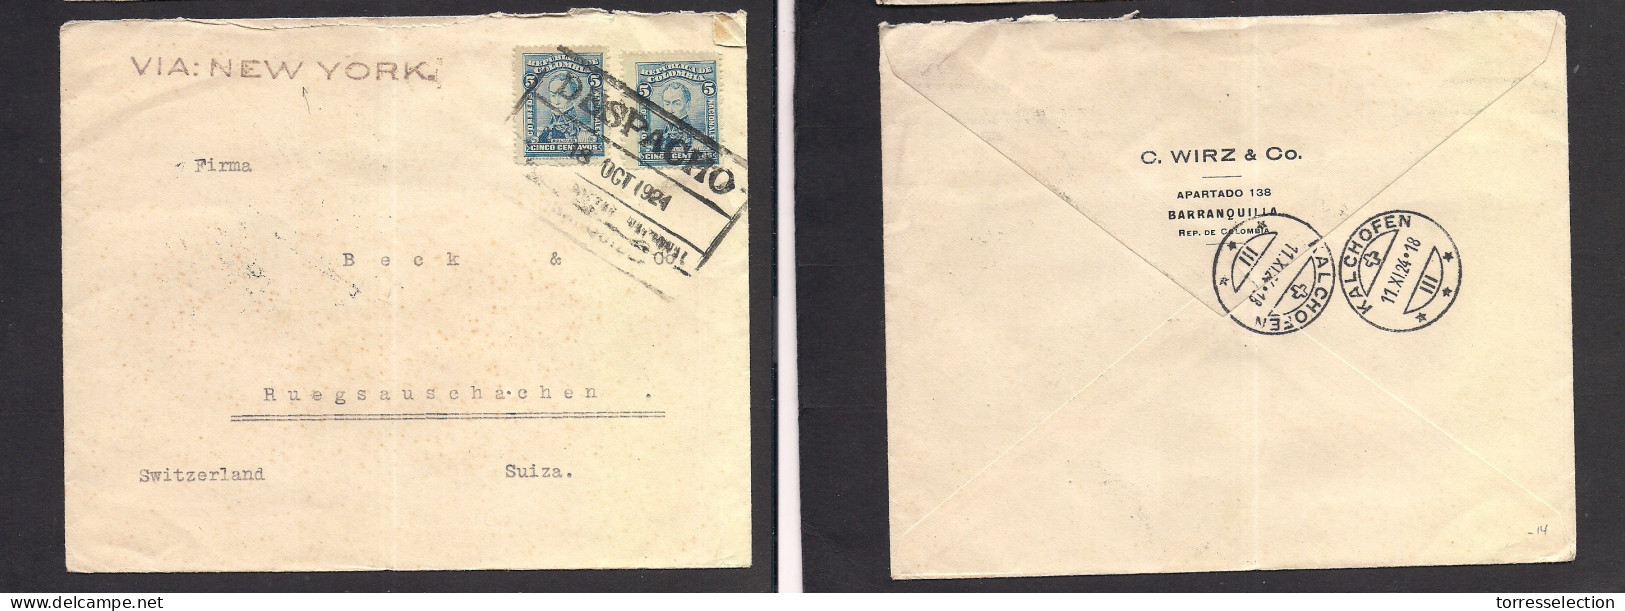 COLOMBIA. 1924 (18 Oct) Barranquilla - Switzerland, Ruegsanschachen Via NY. Multifkd Env. XSALE. - Colombia